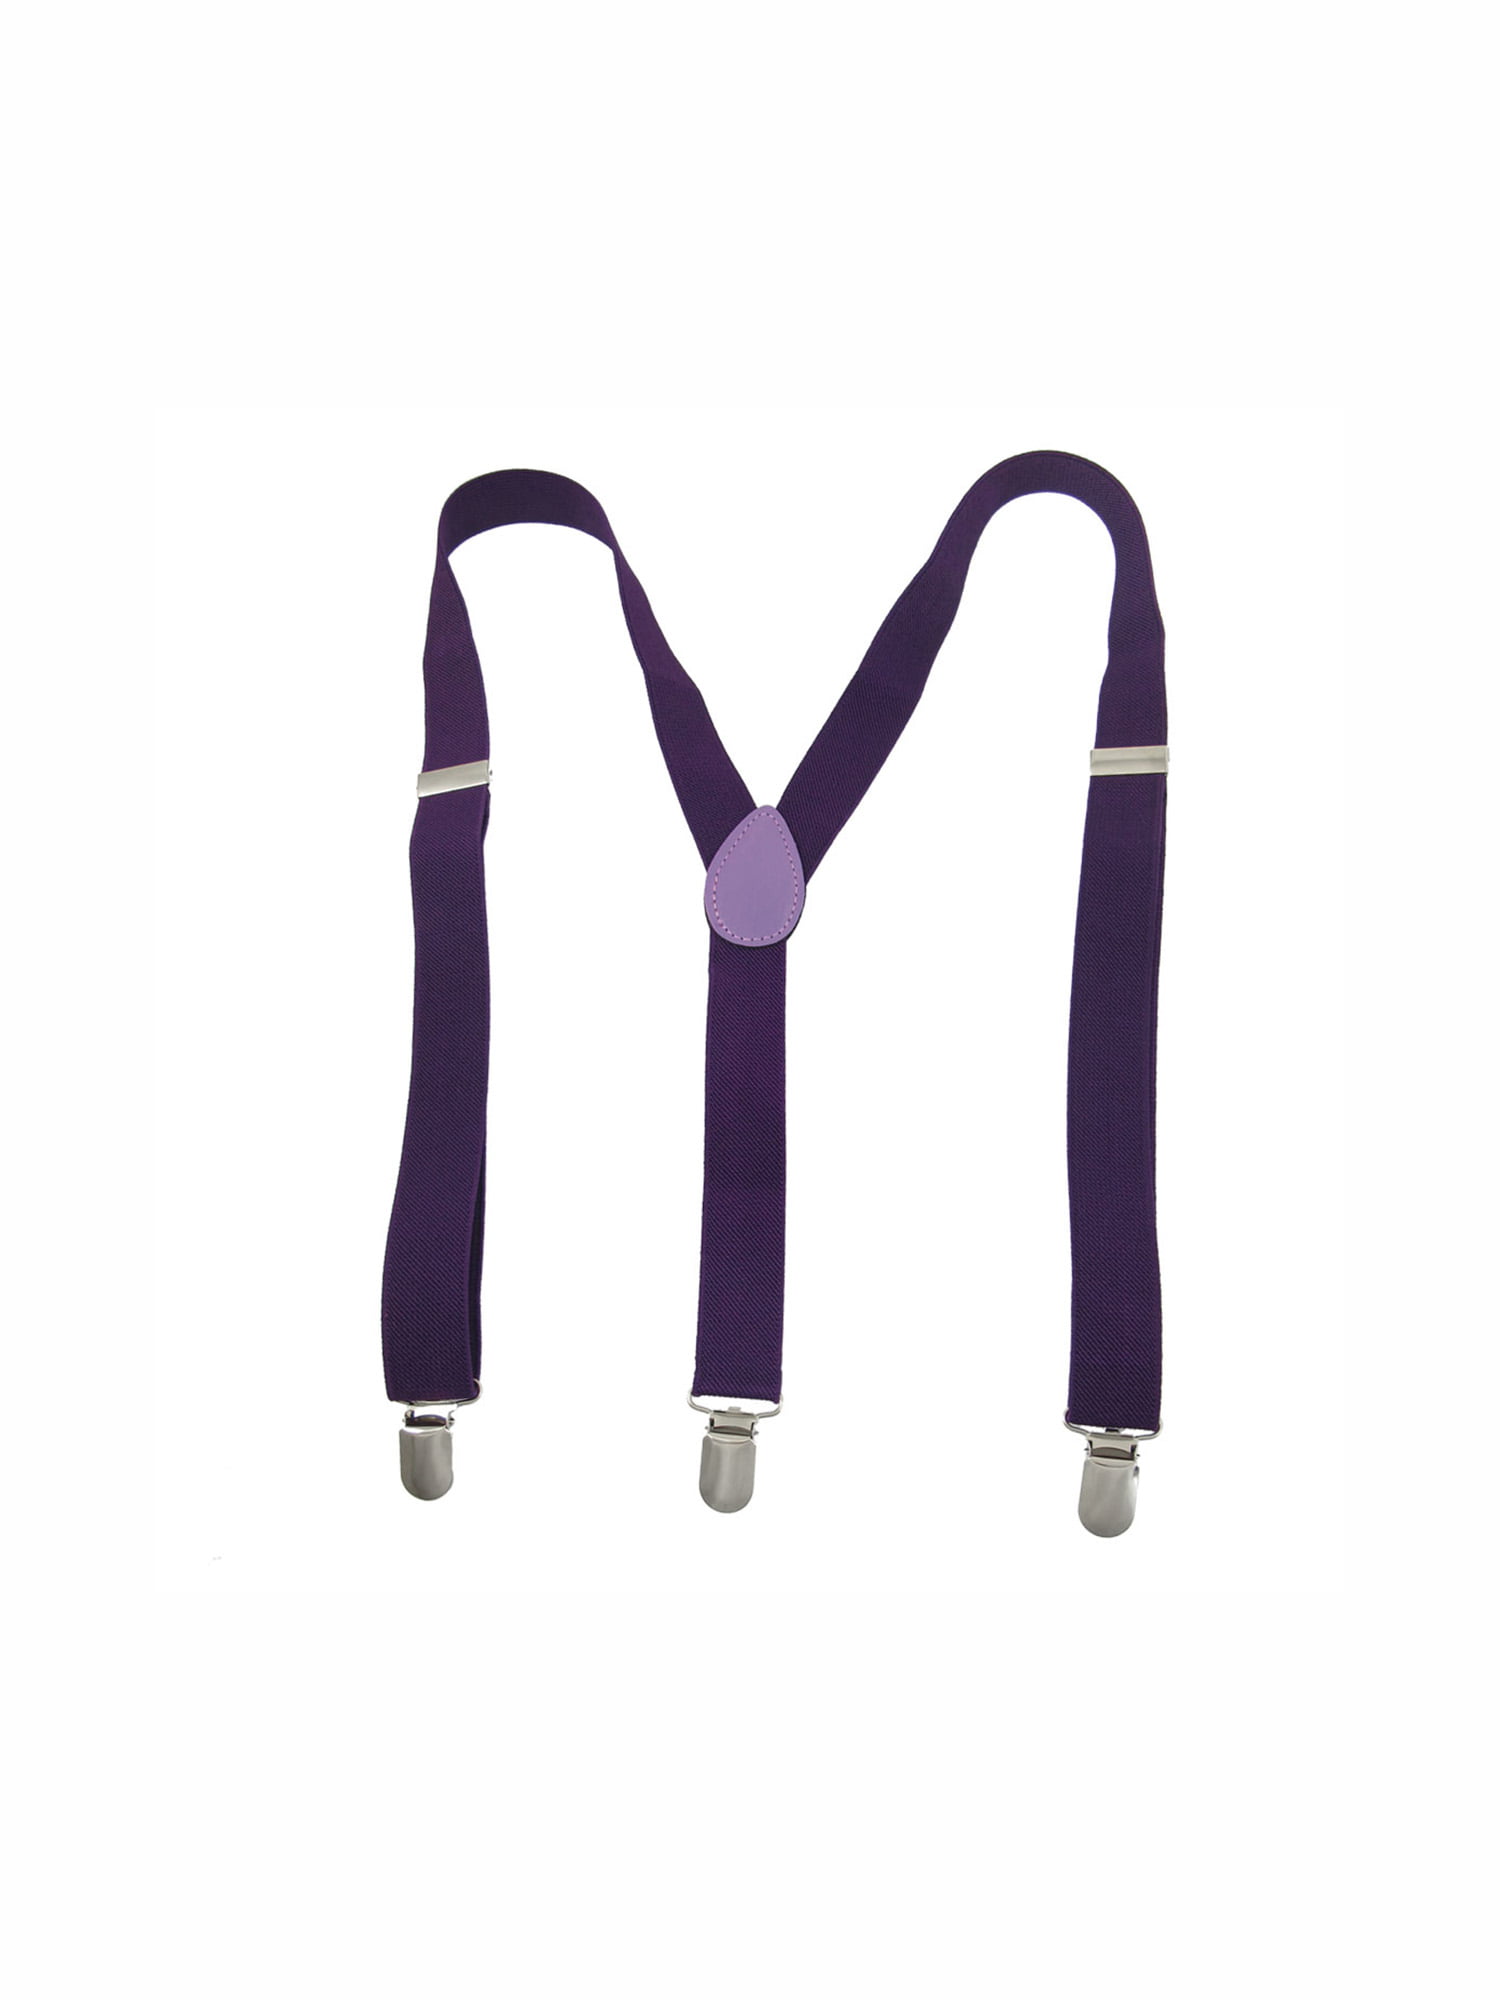 Unisex Clip-on Braces Elastic Suspender "Solid Plain" Y back Suspenders 